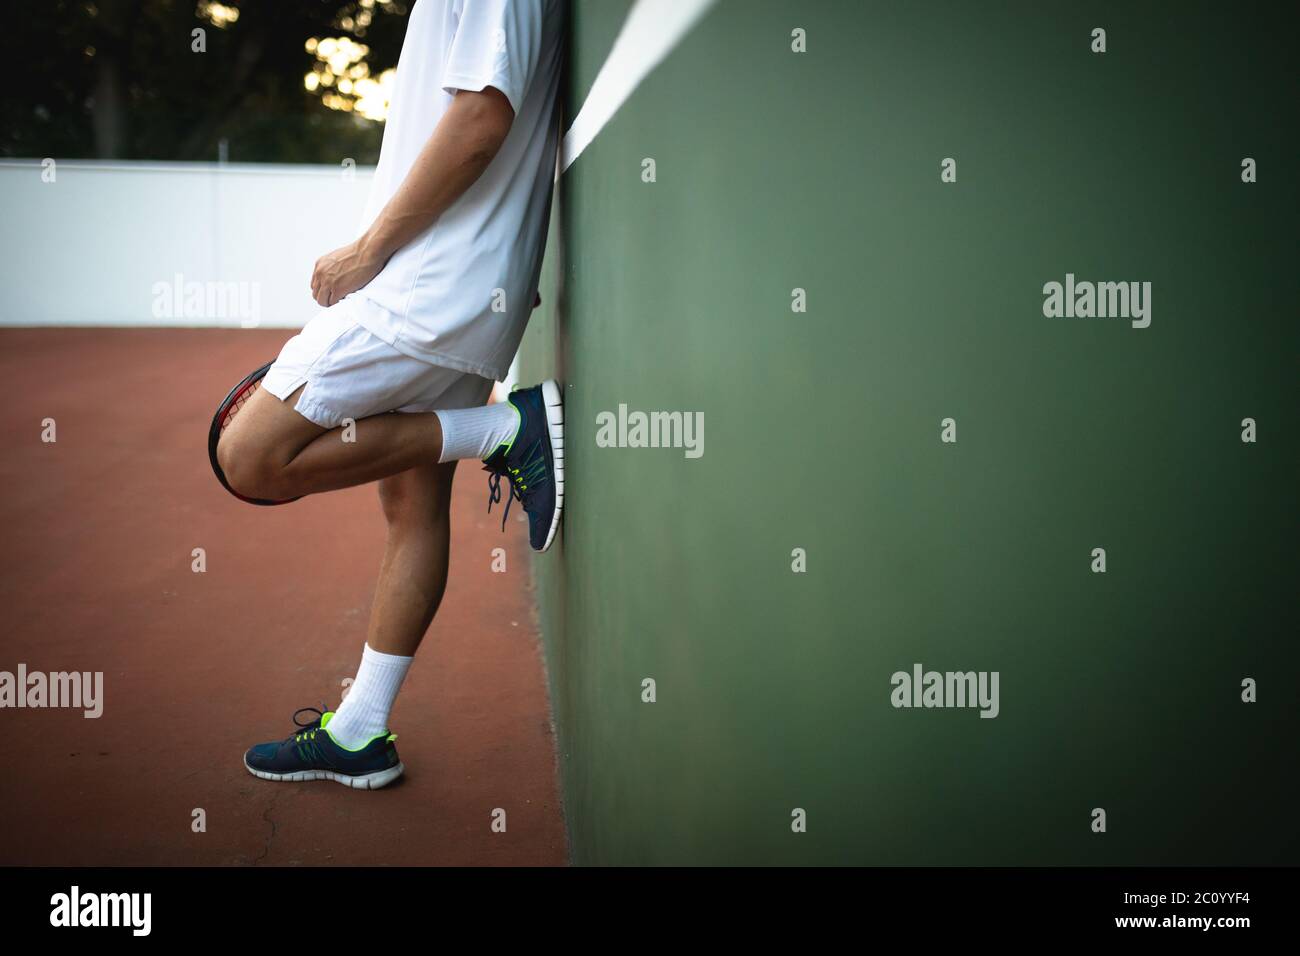 Caucasian man training on a tennis court Stock Photo